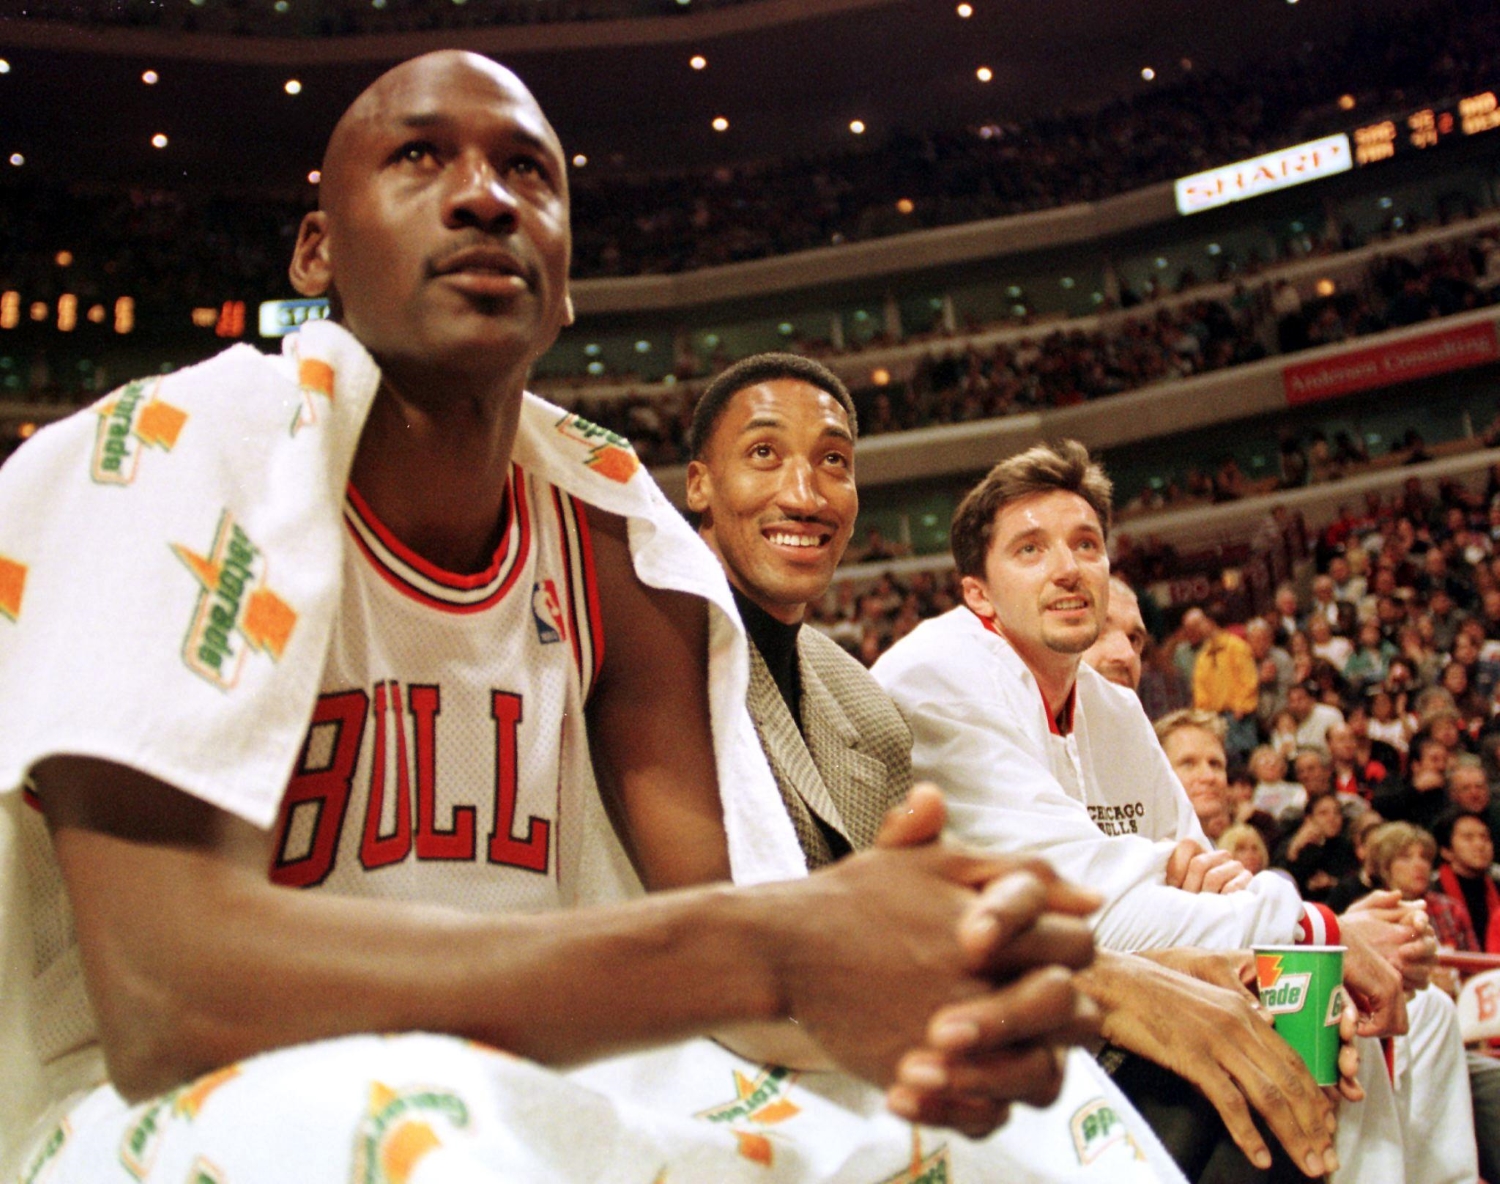 Bulls players Michael Jordan, Scottie Pippen, and Toni Kukoc sit on the bench.